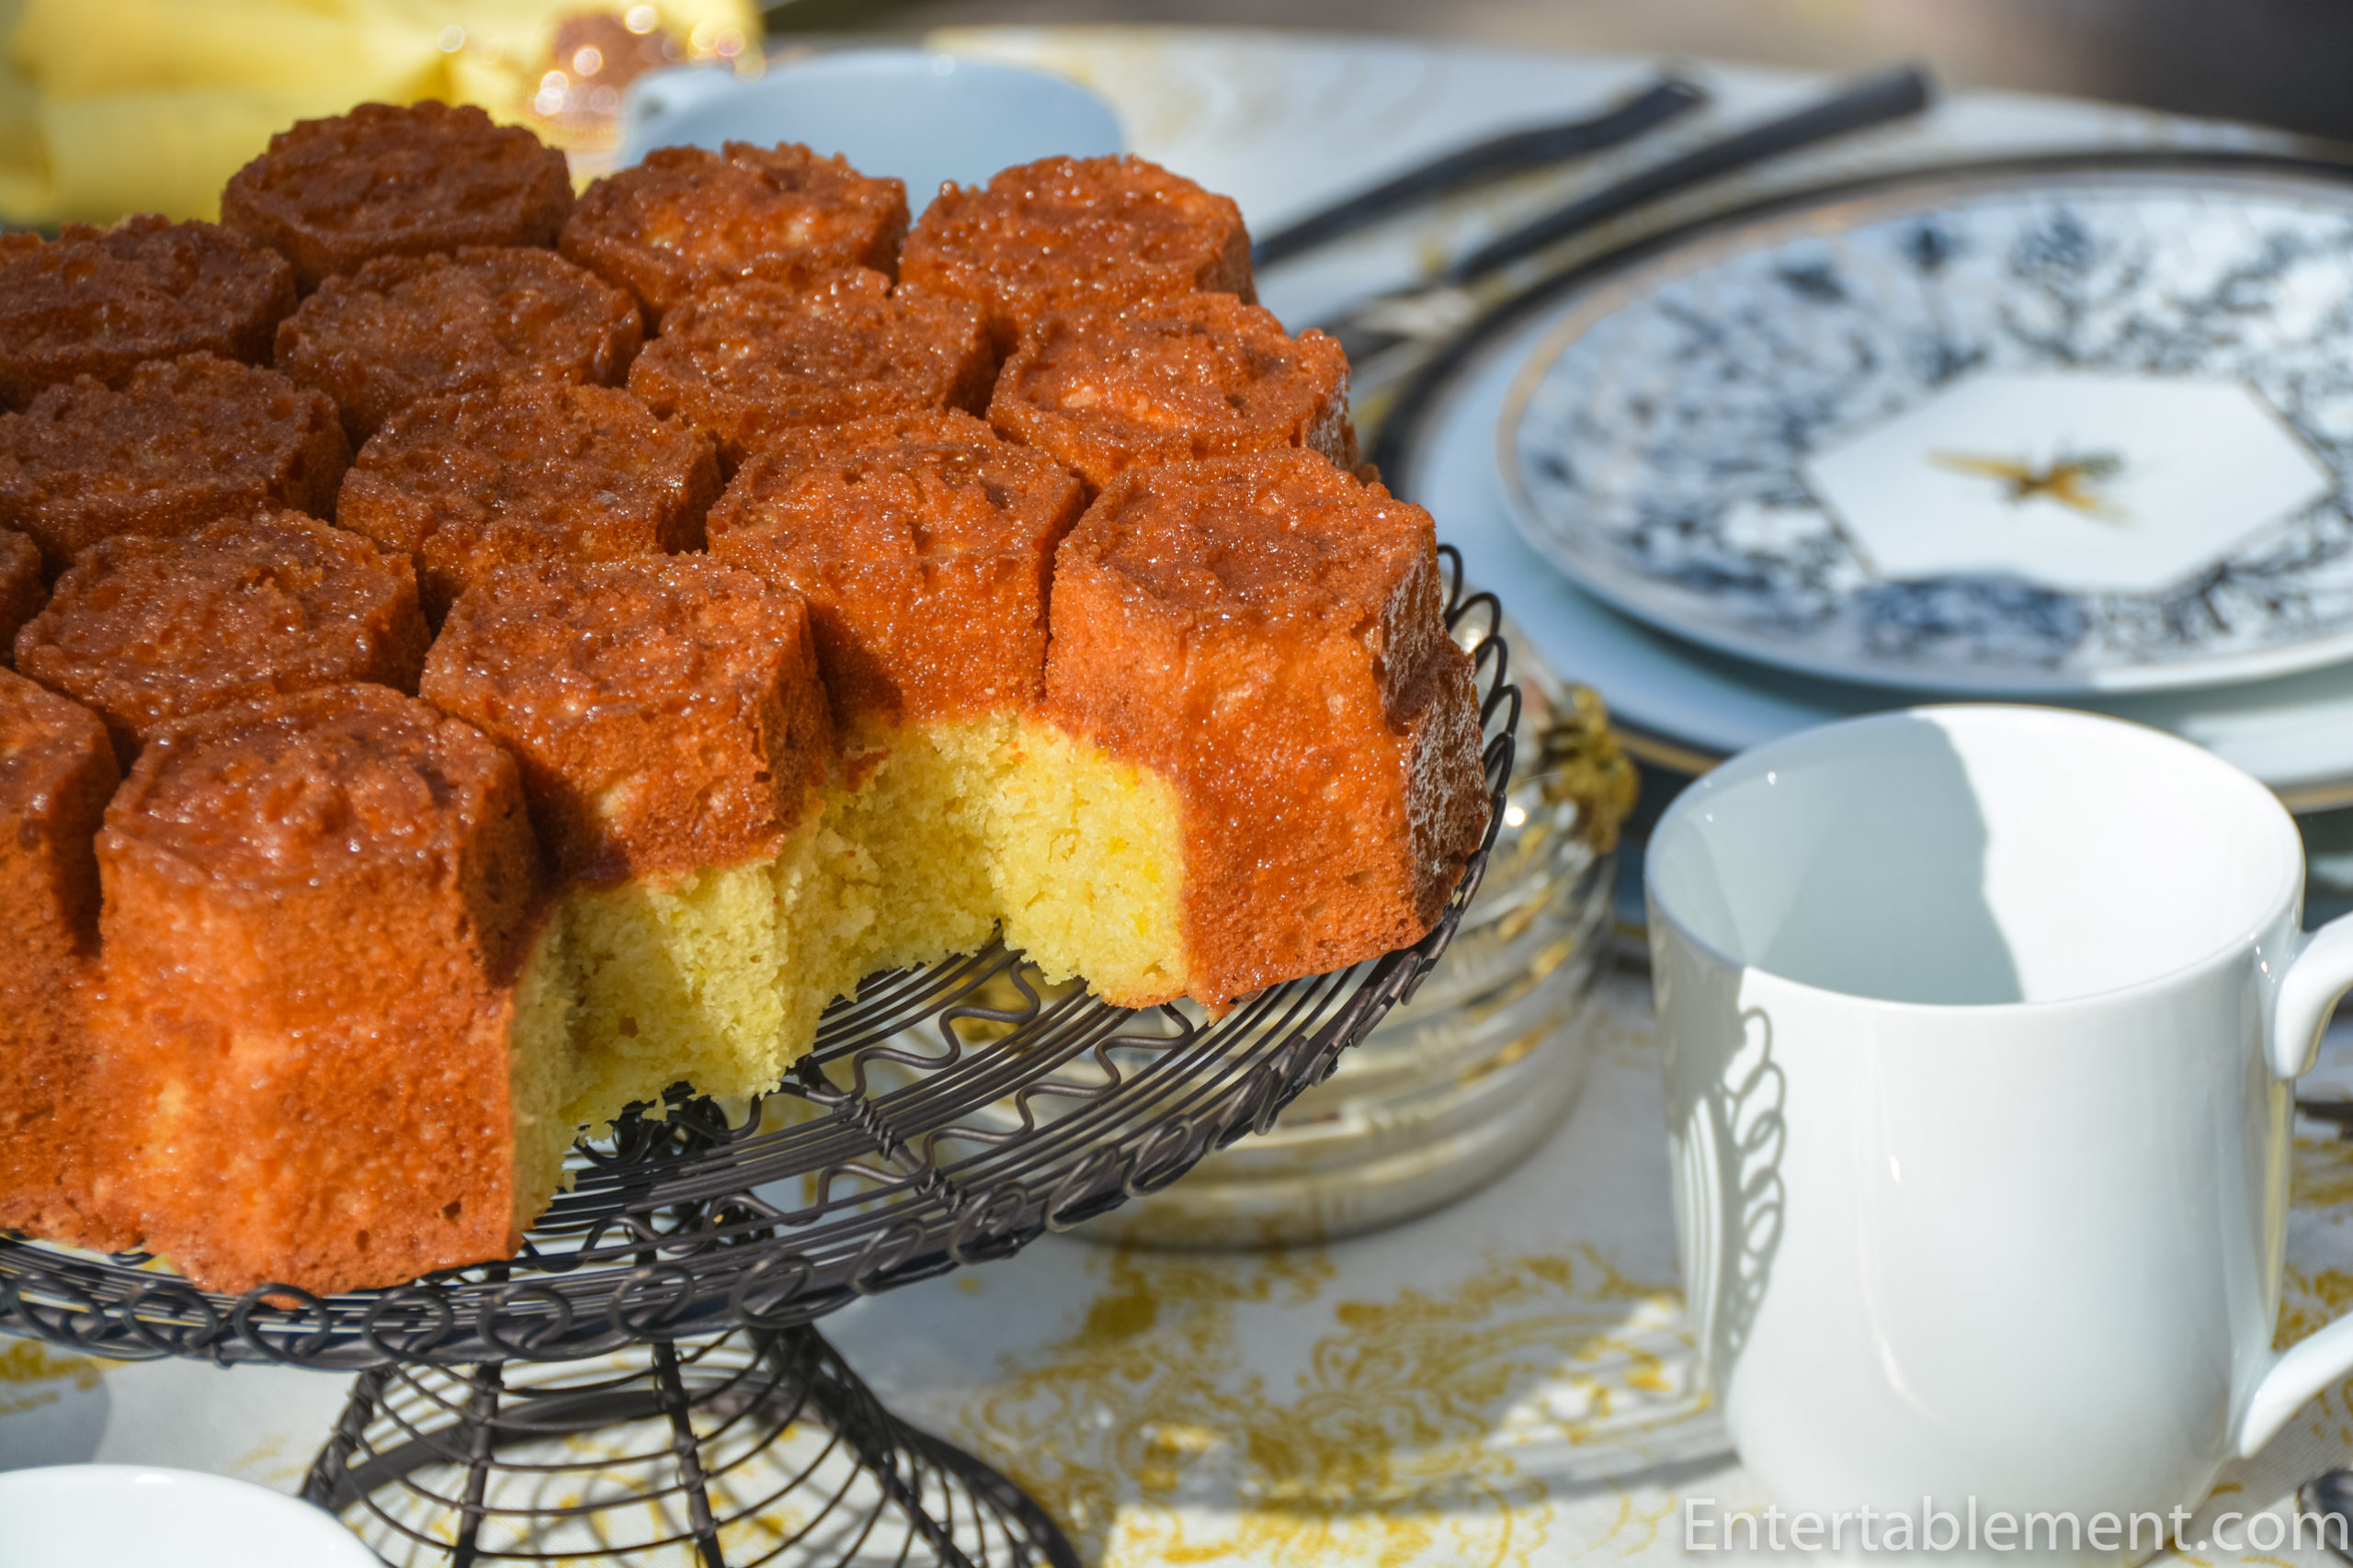 Nordic Ware Beehive Cake Bundt Pan